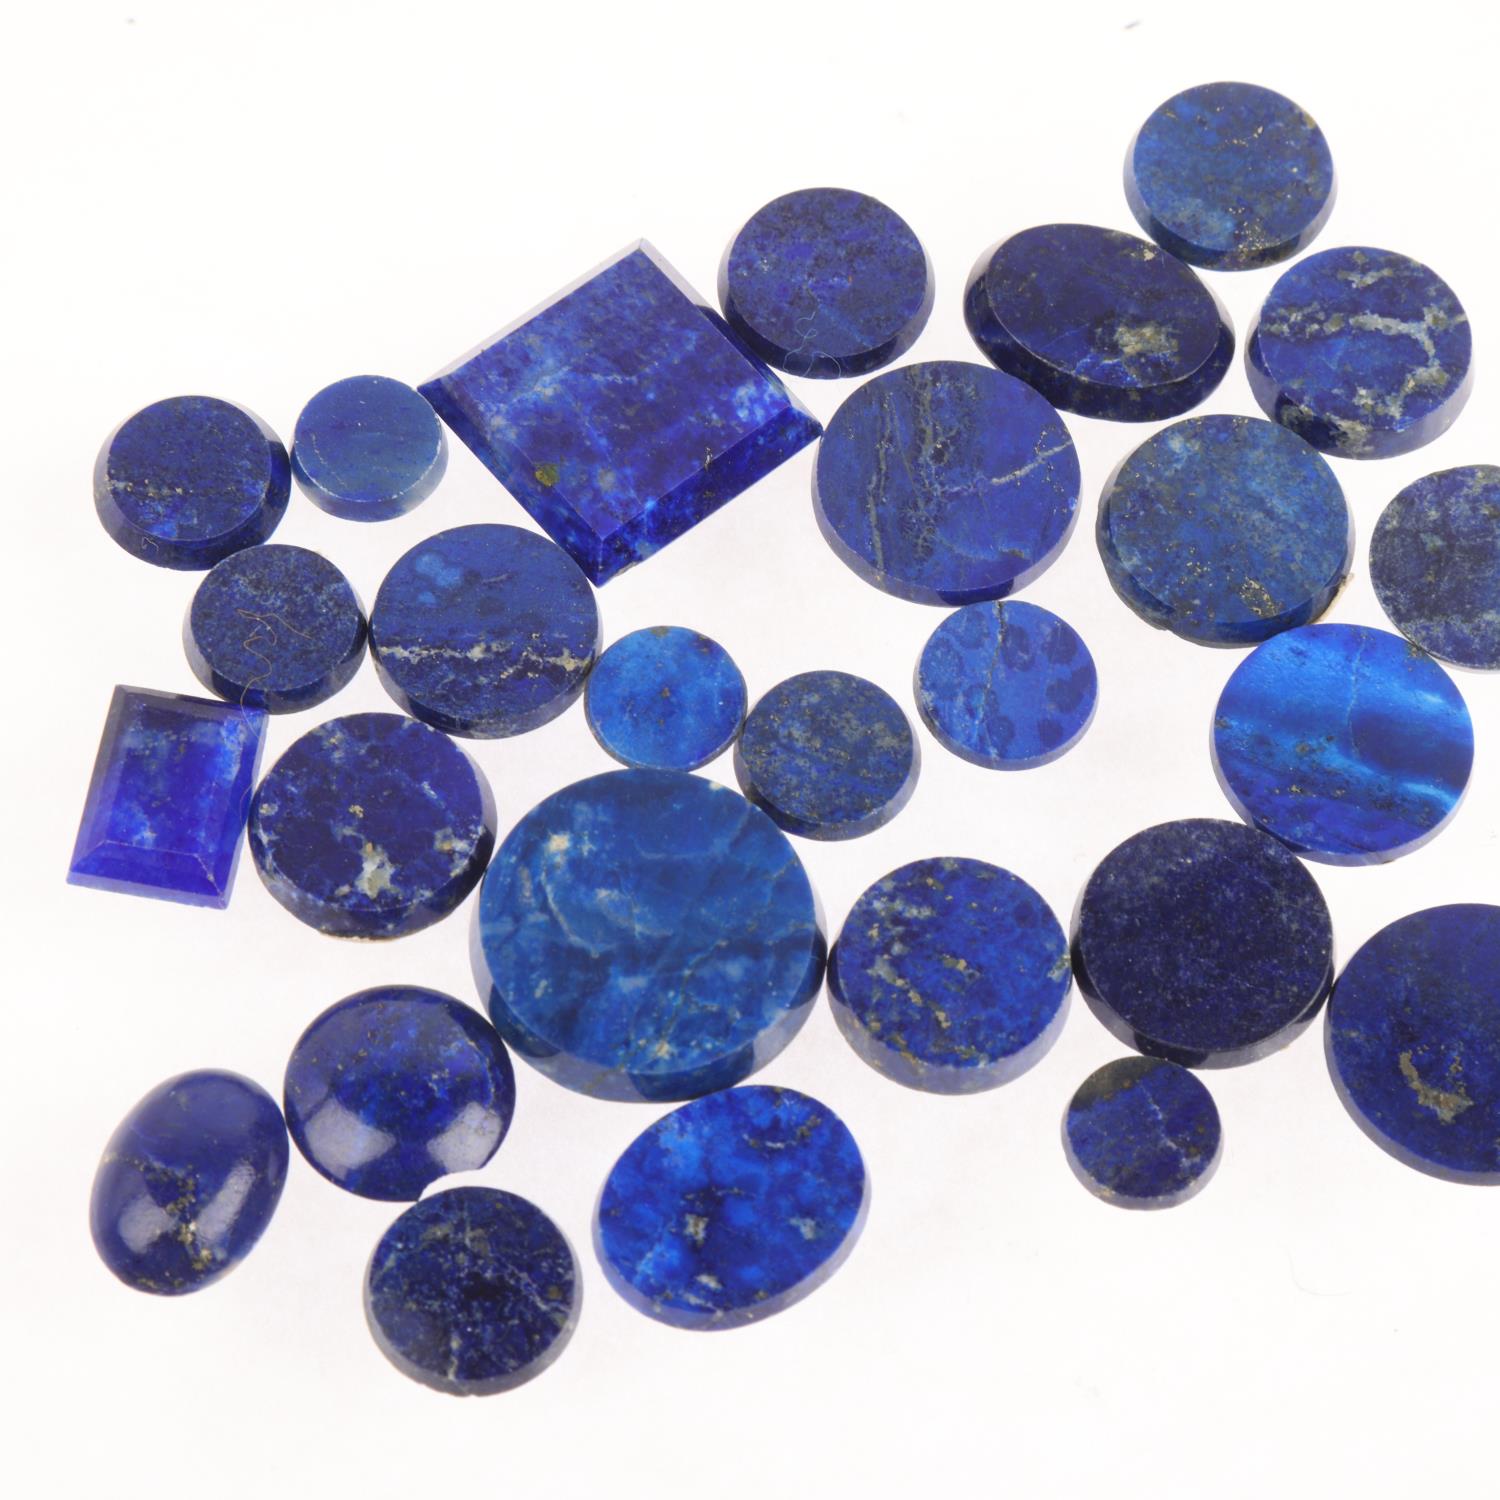 25 various lapis lazuli tablets, largest circle diameter 23.4mm A few have faint hairline cracks, - Image 2 of 4